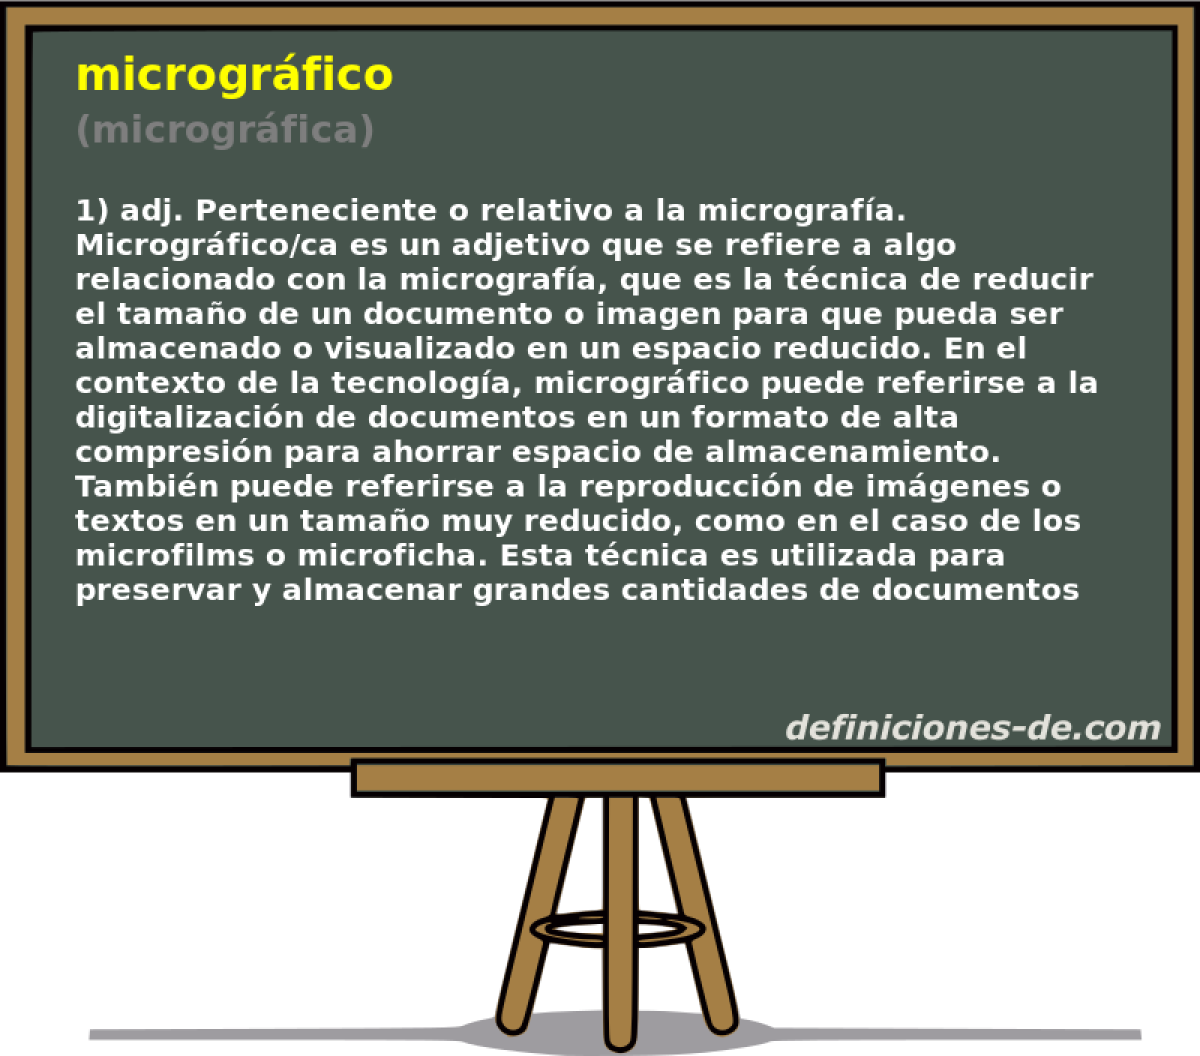 microgrfico (microgrfica)